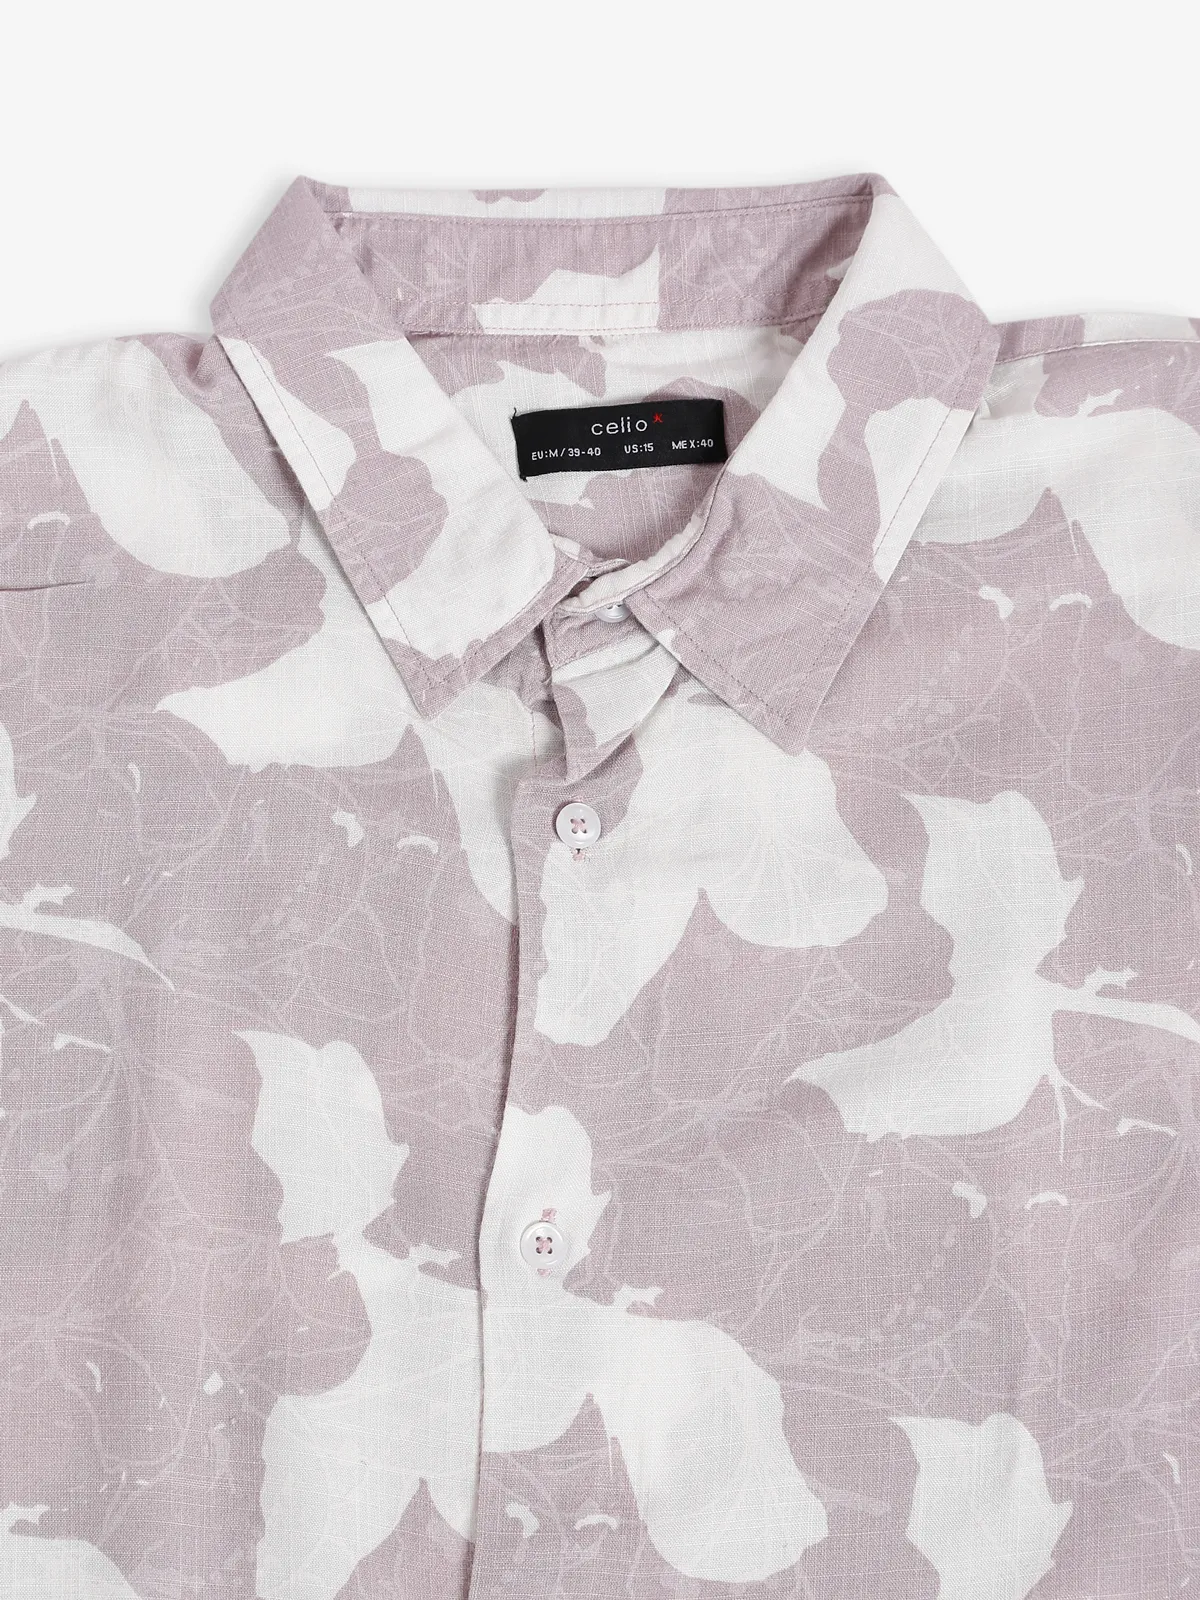 Celio mauve pink printed shirt